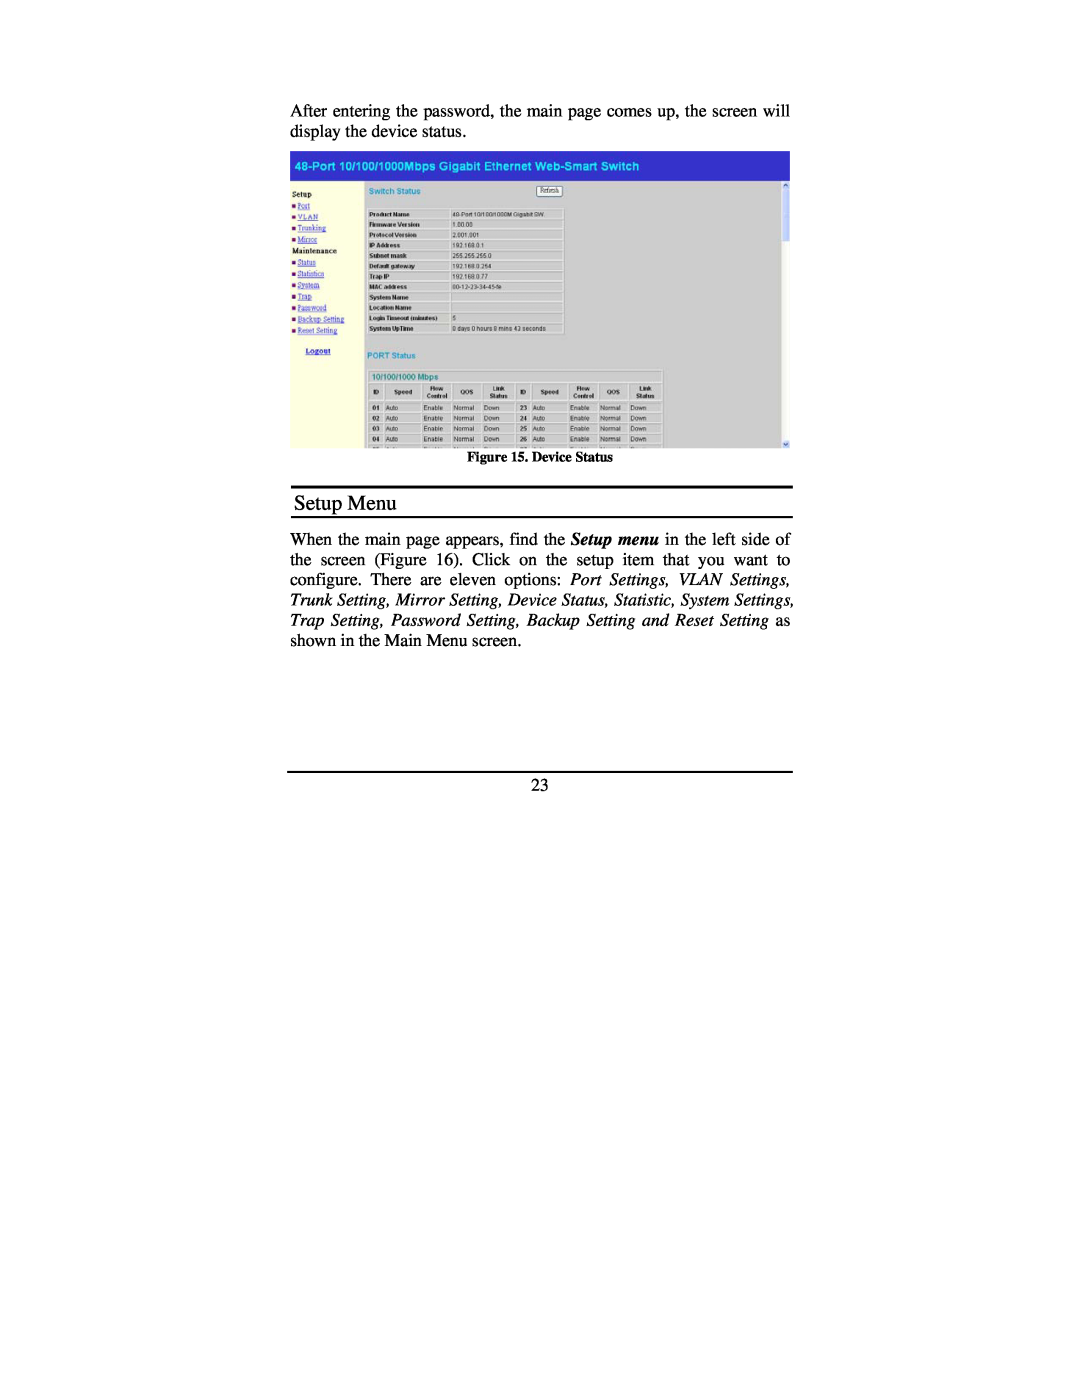 TRENDnet TEG-448WS manual Setup Menu, Device Status 